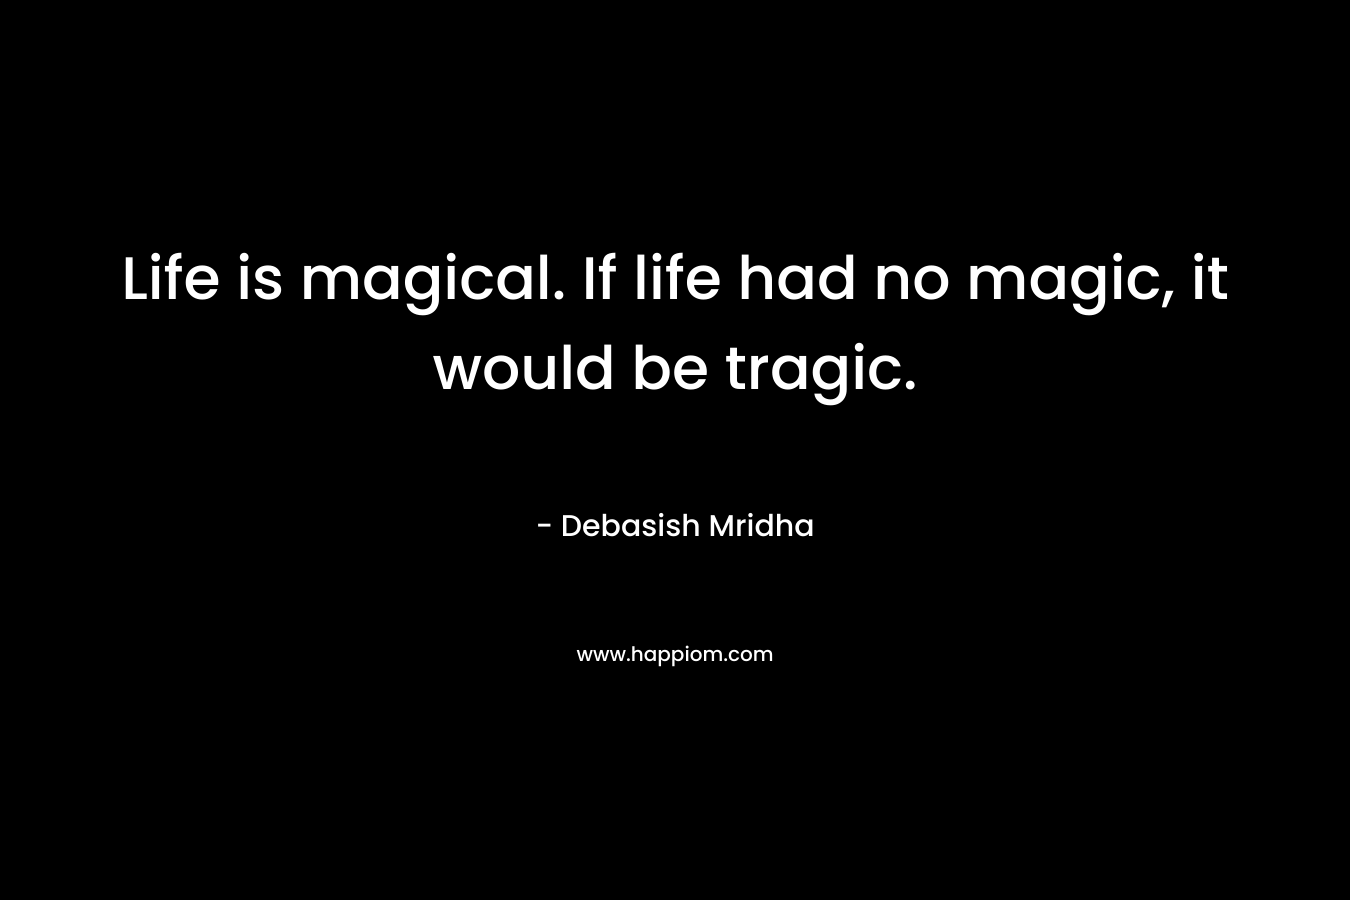 Life is magical. If life had no magic, it would be tragic.